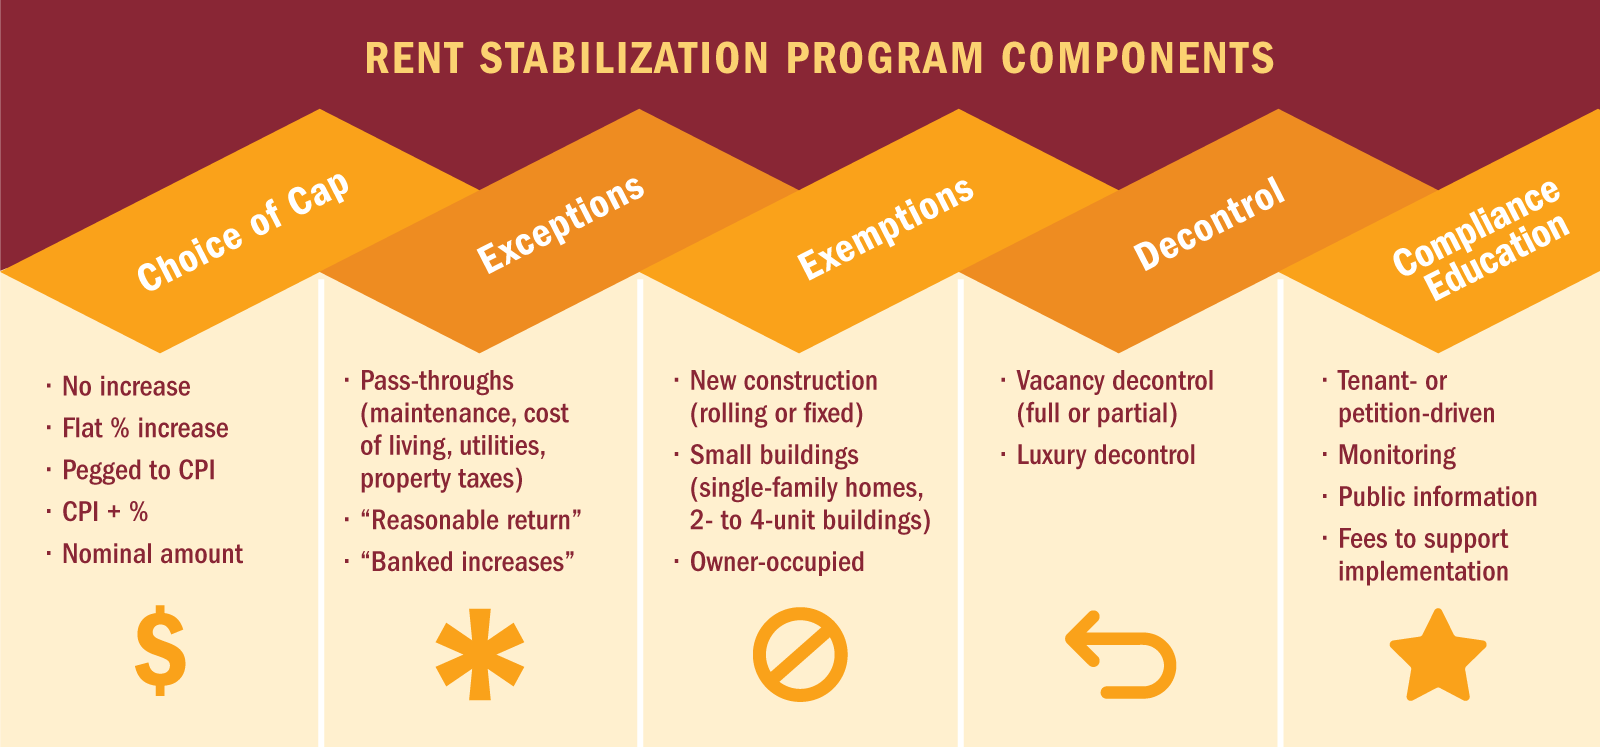 Rent stabilization program components